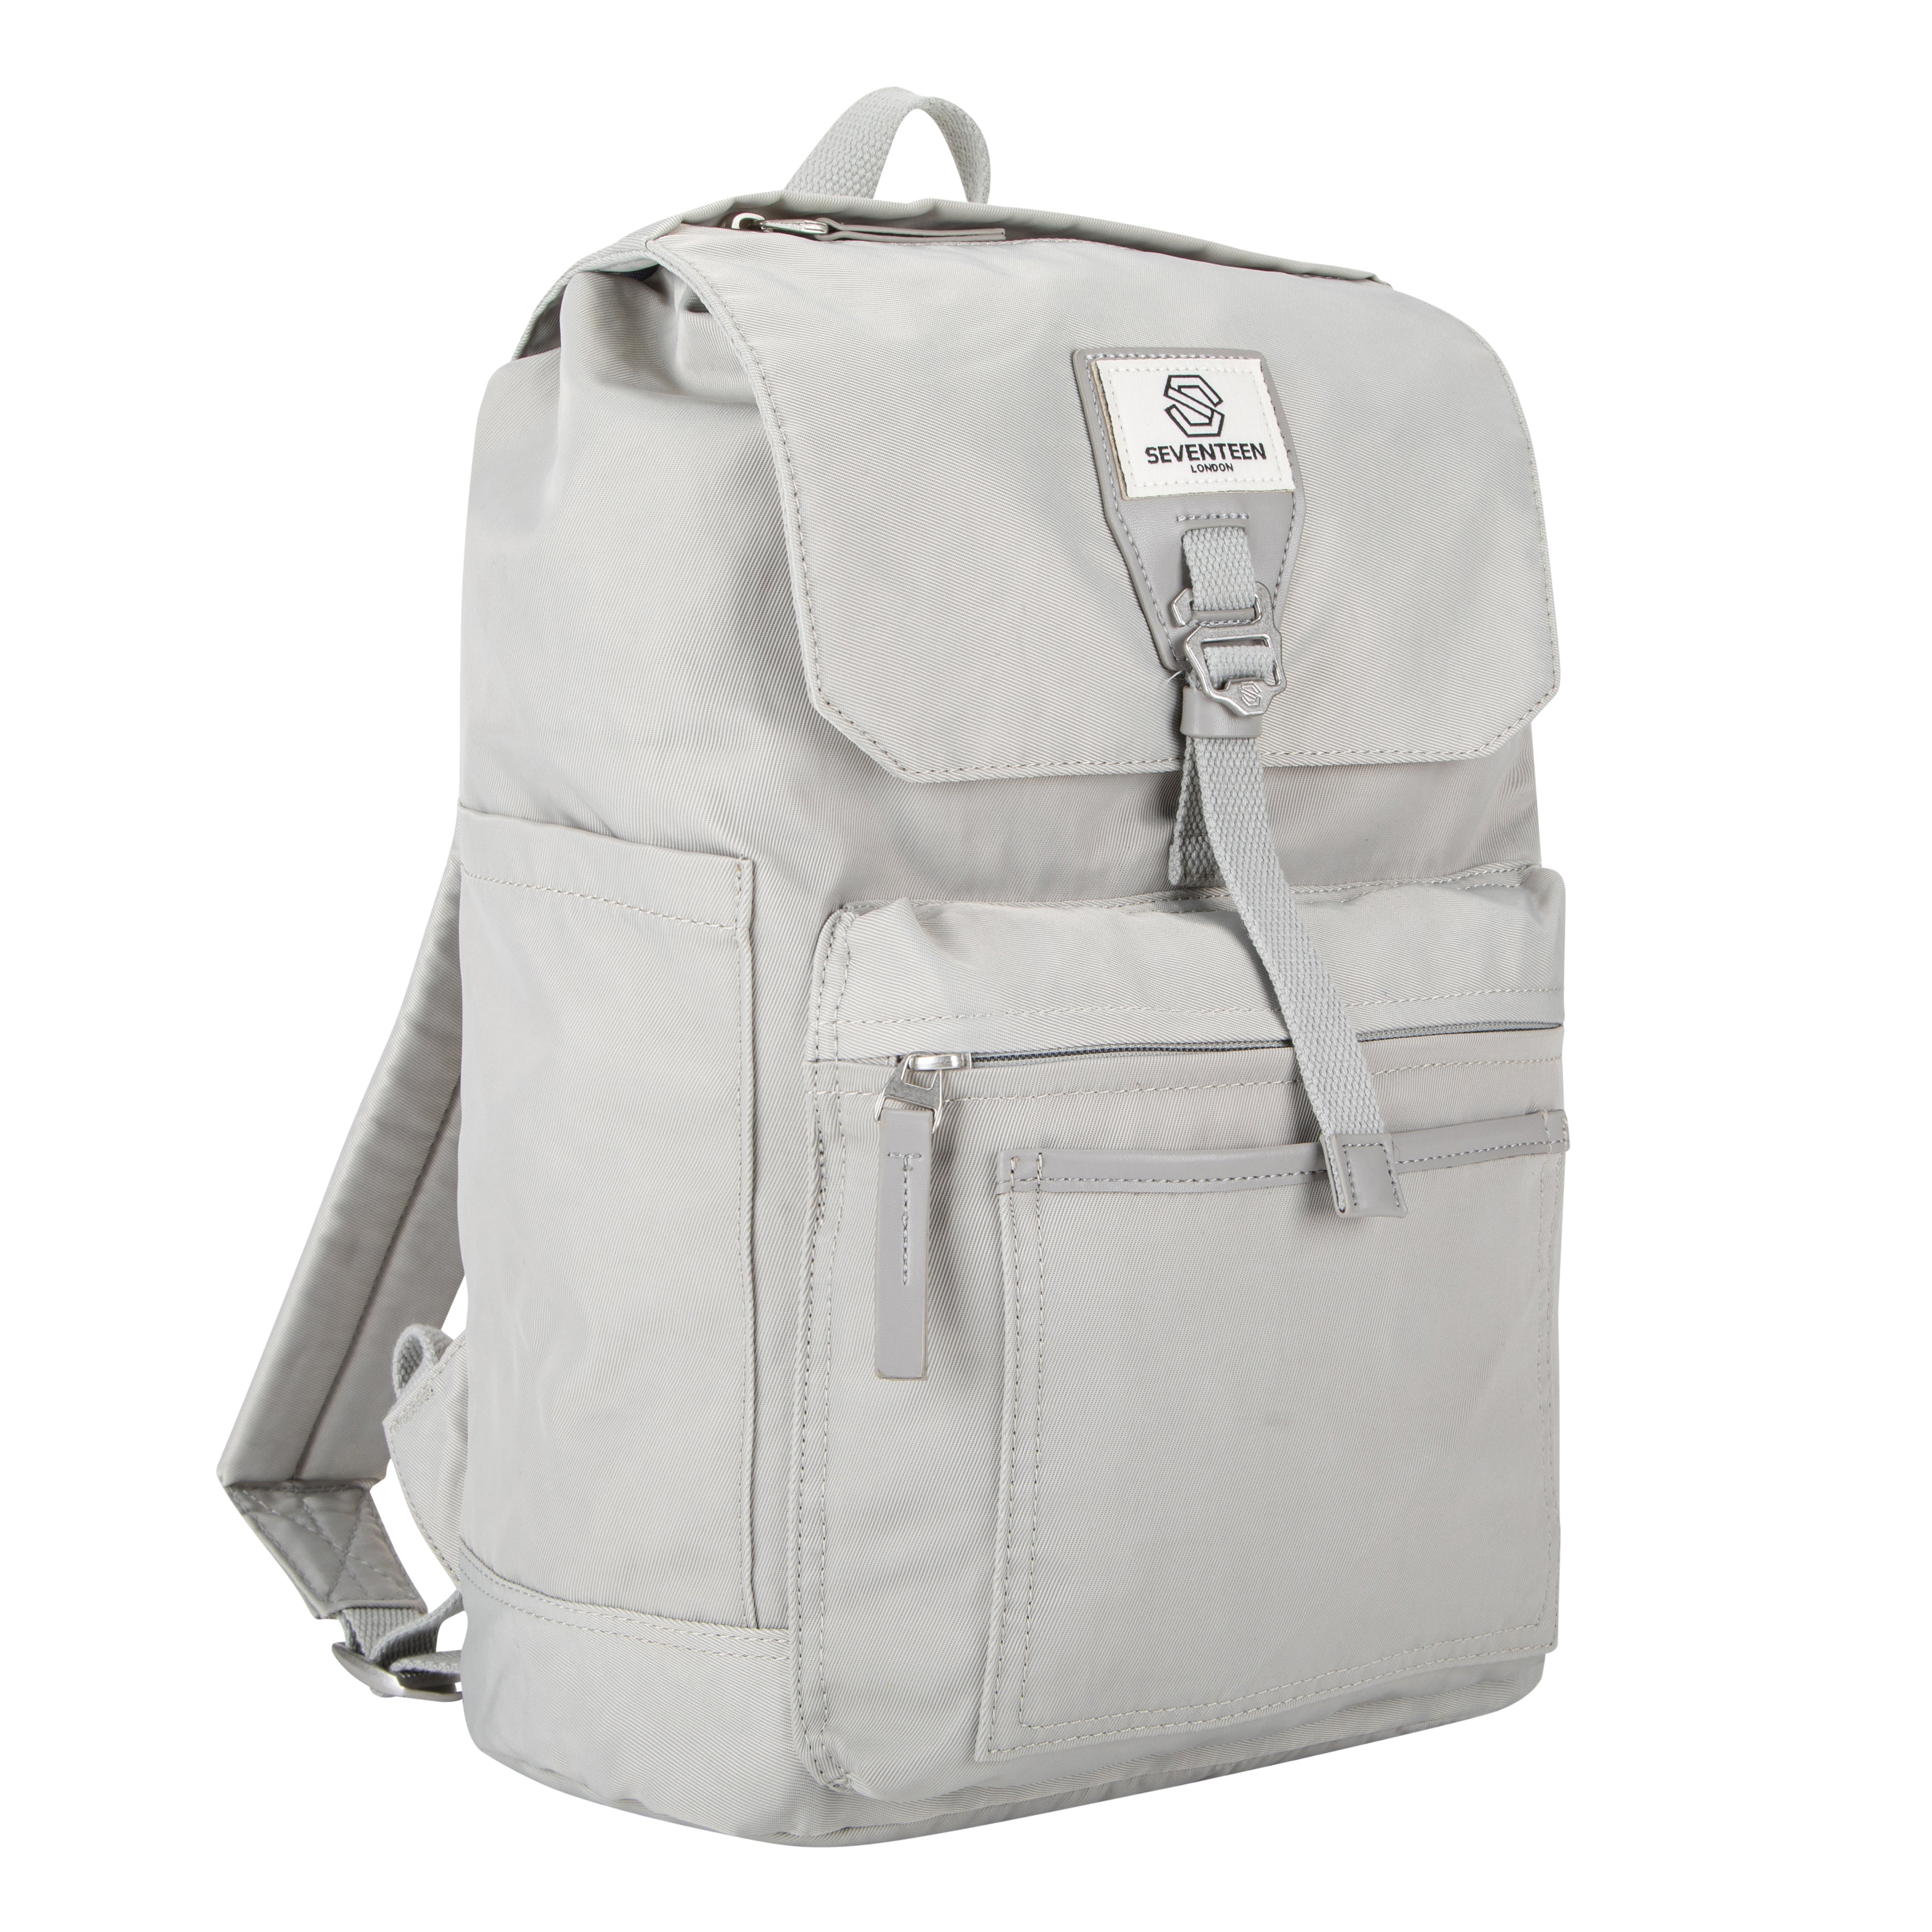 Fulham Backpack - Light Grey